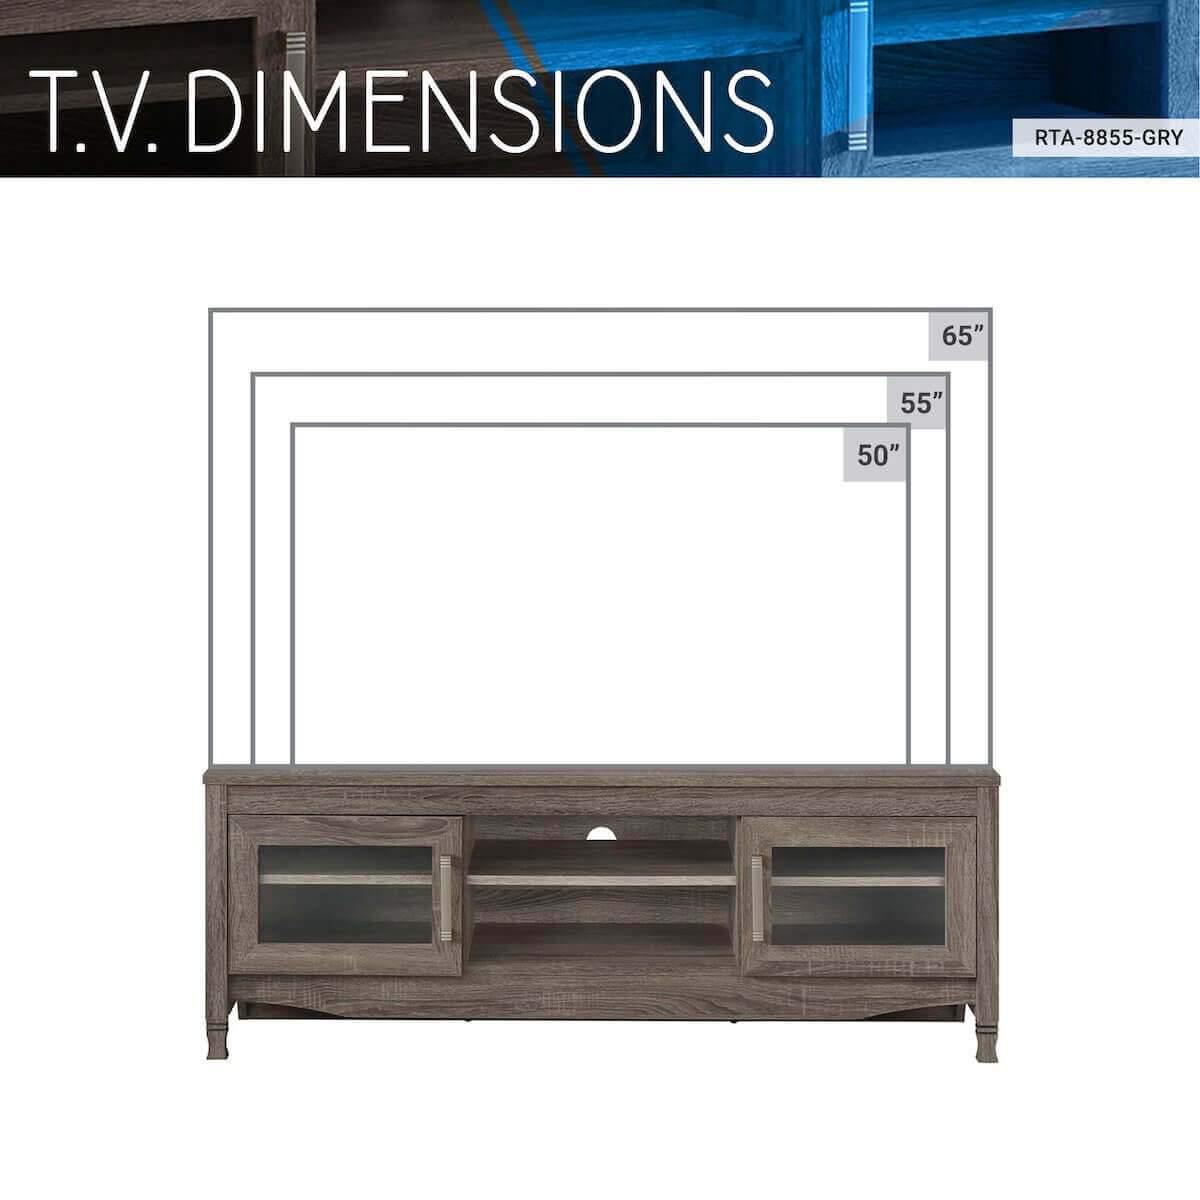 Techni Mobili Gray Driftwood TV Stand RTA-8855-GRY TV Dimensions